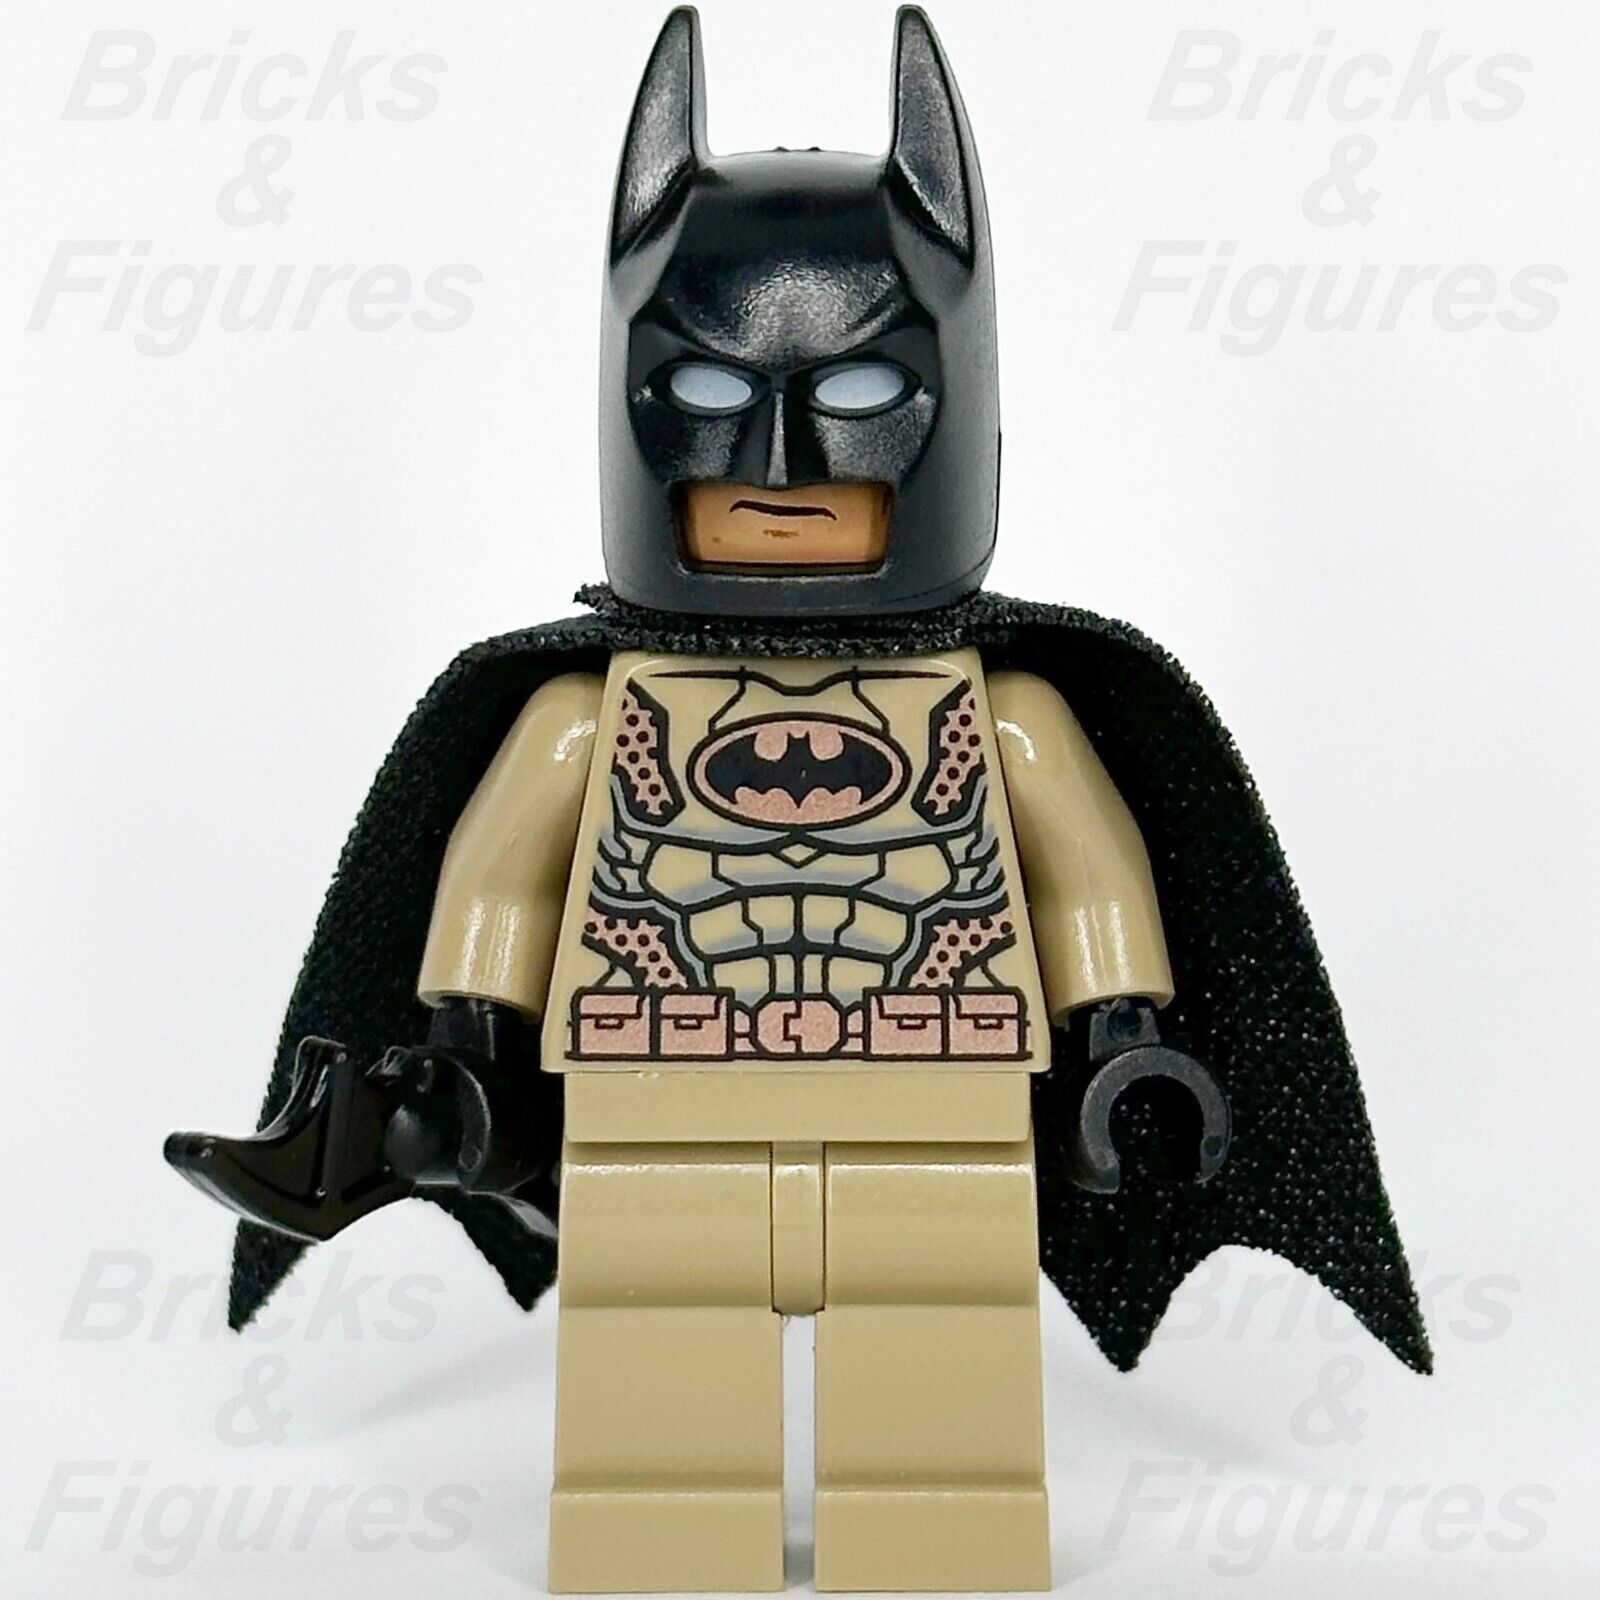 LEGO DC Super Heroes Desert Batman Minifigure Bruce Wayne Batman 2 76056 sh288 2